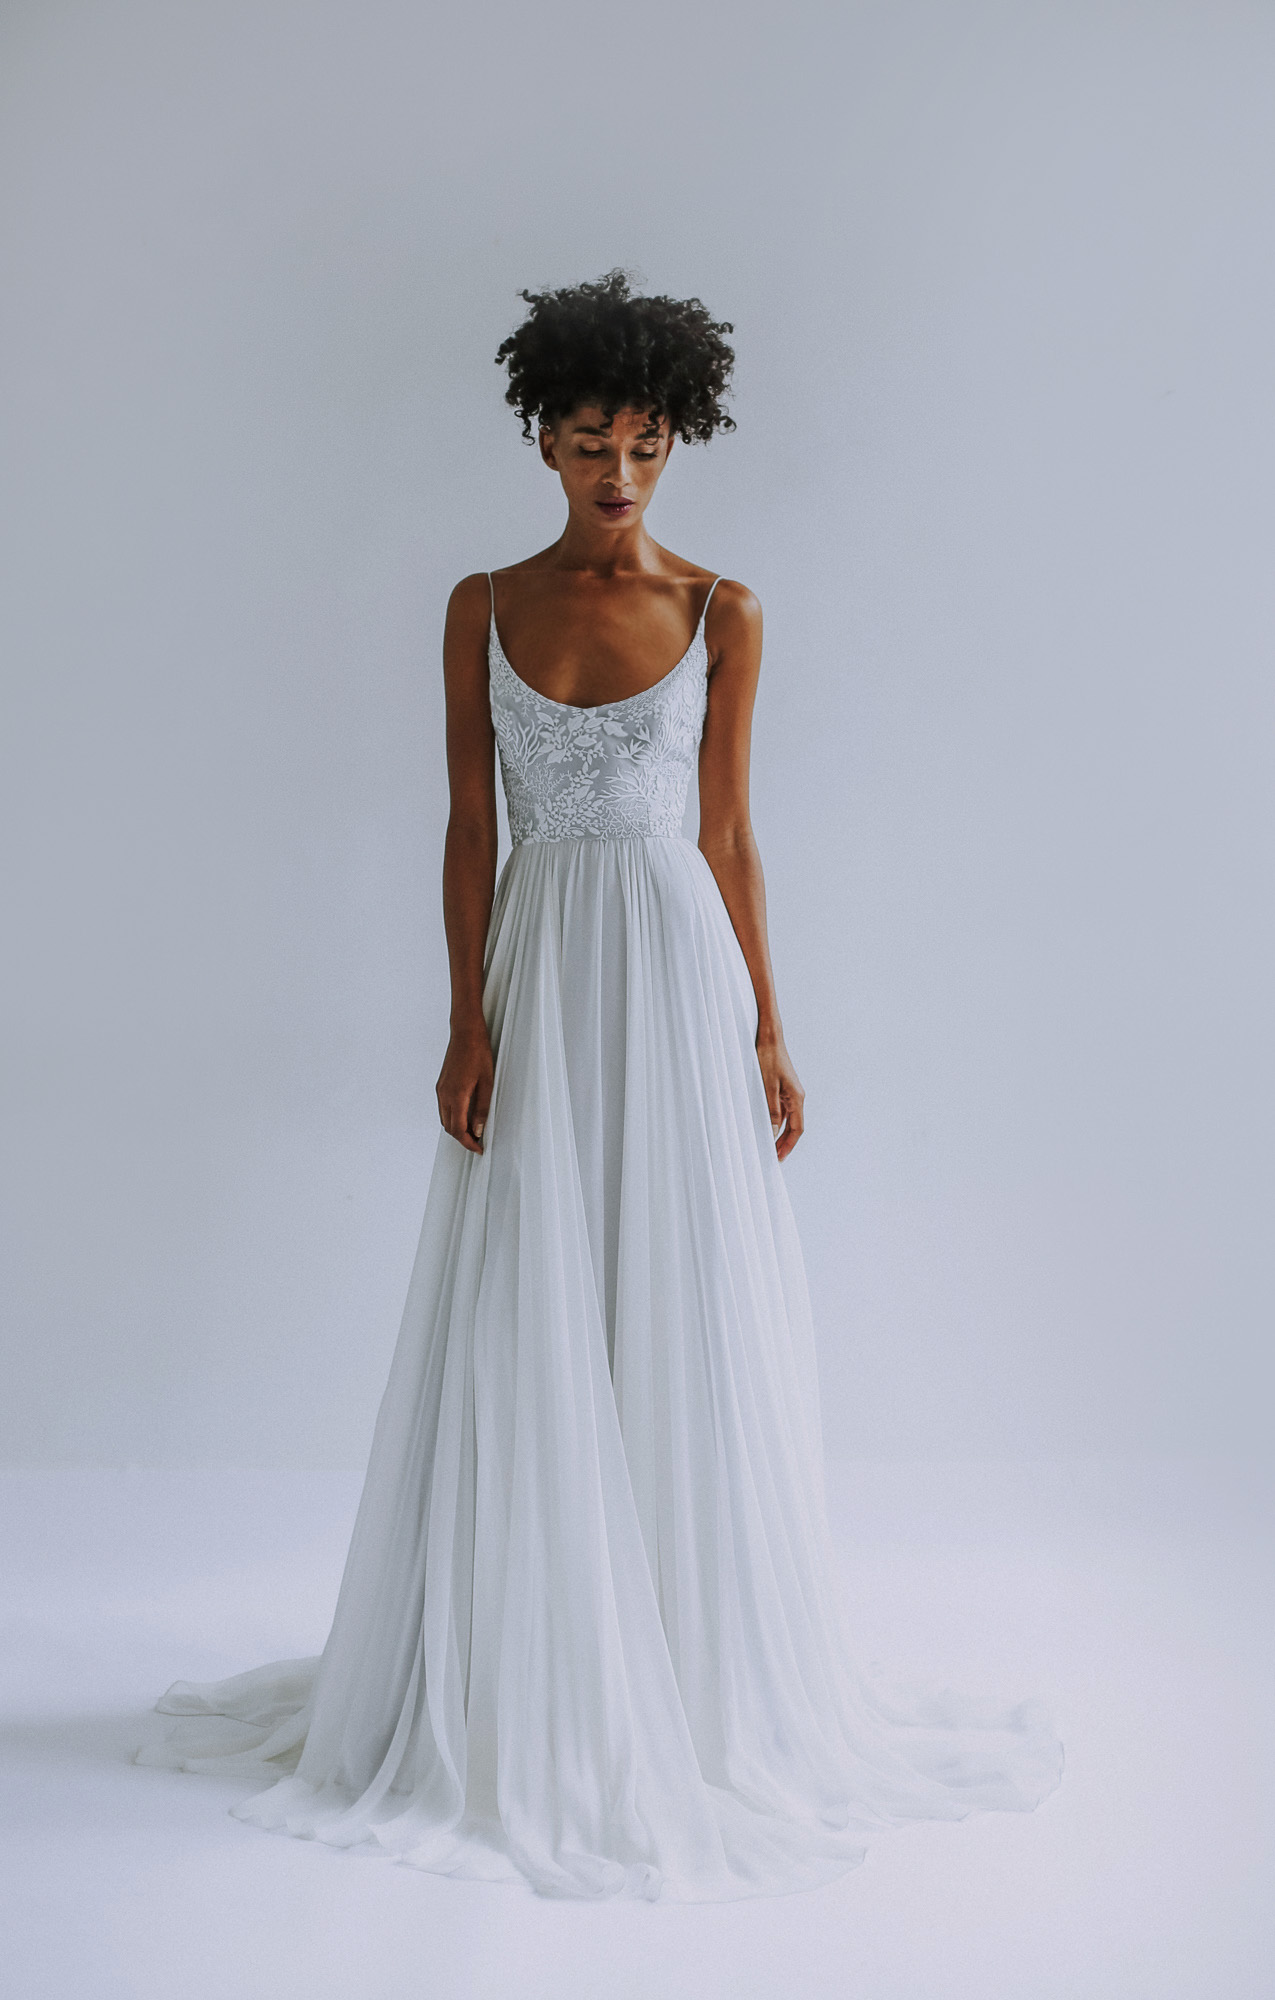 leanne-marshall-wedding-gown-15.jpg